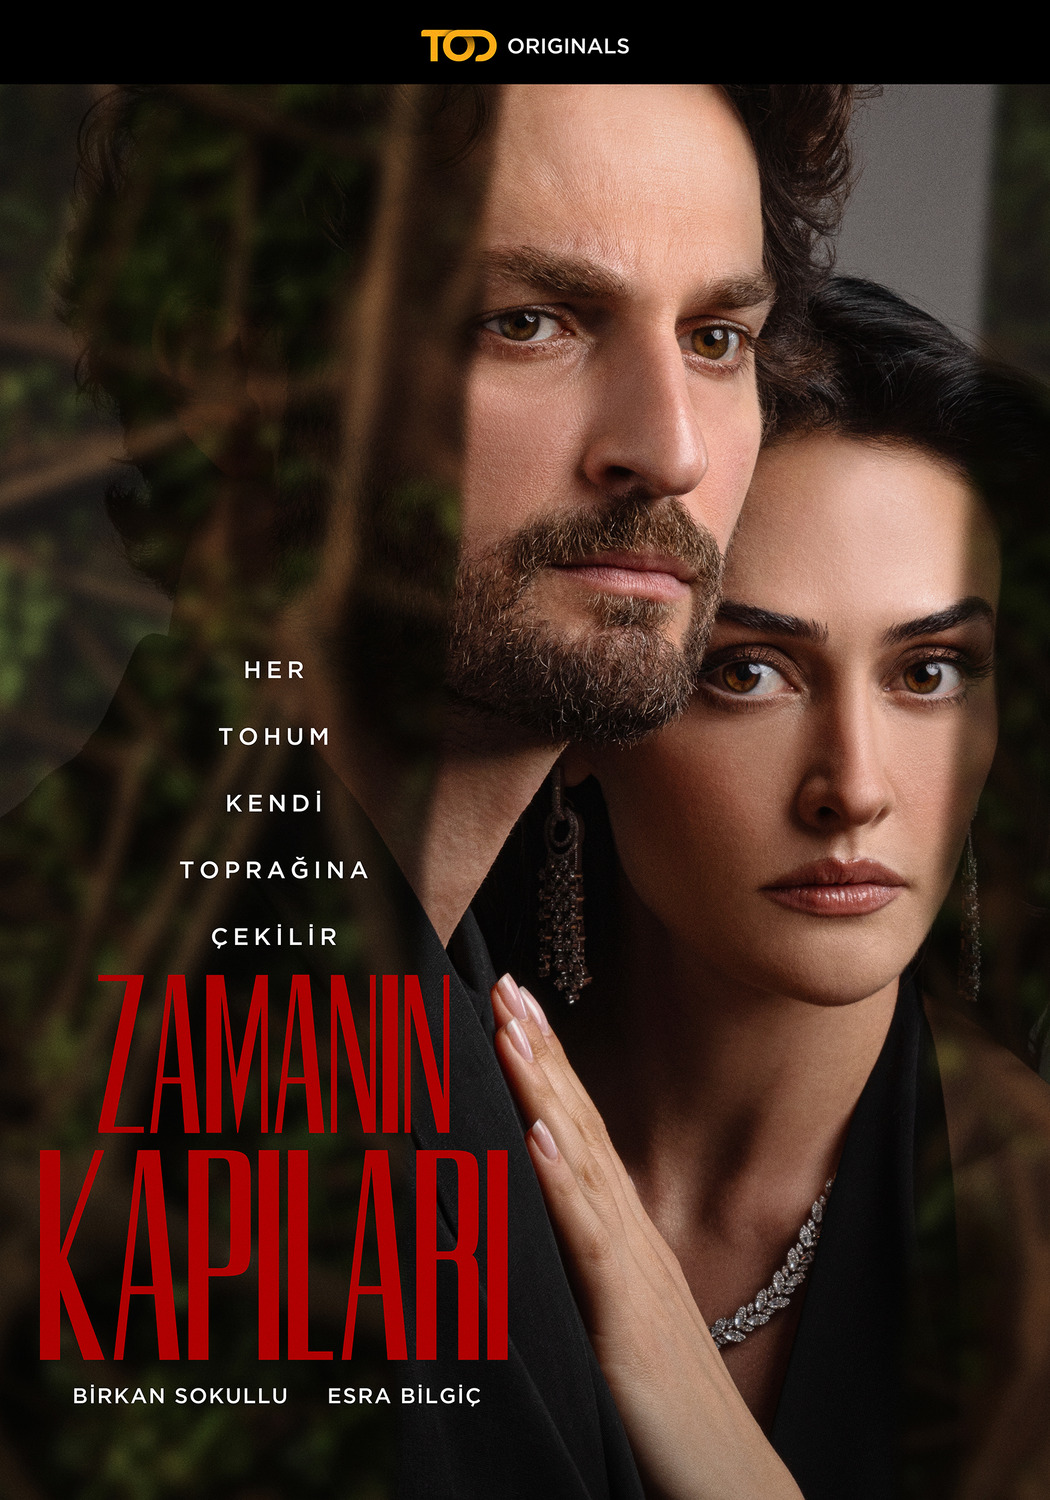 Extra Large TV Poster Image for Zamanin Kapilari (#1 of 4)